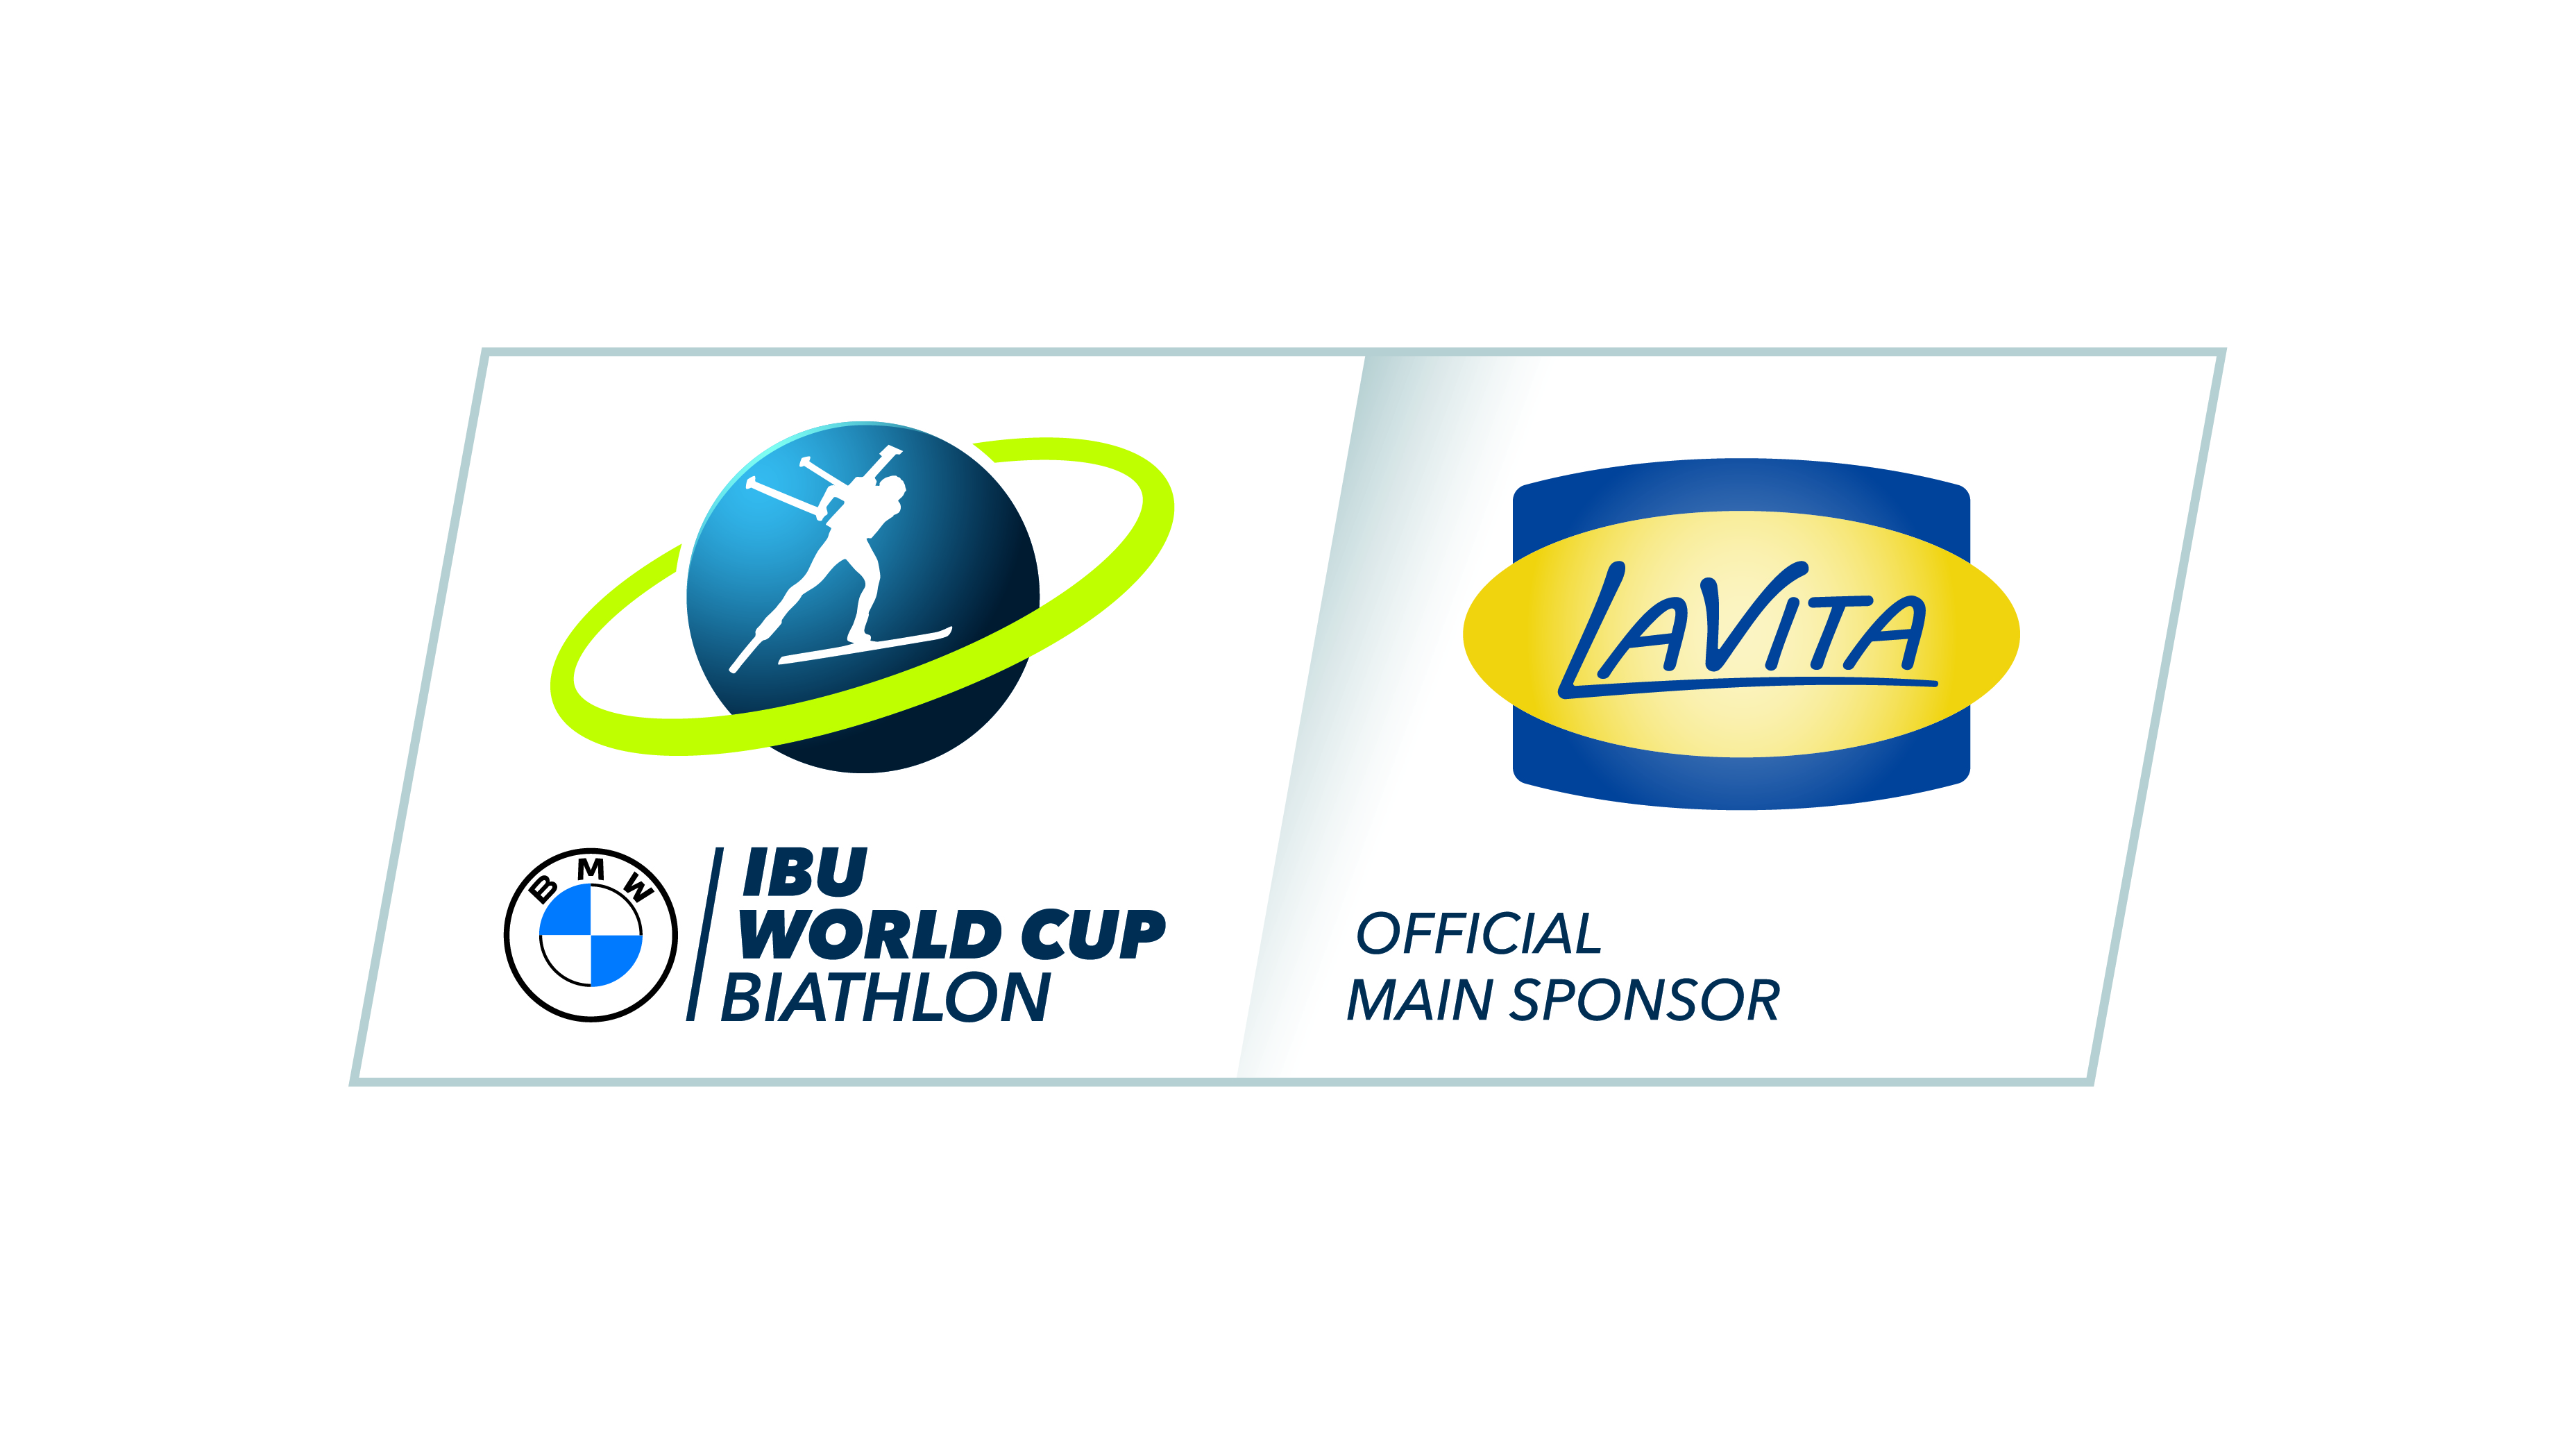 LaVita named as new Main Sponsor of BMW IBU World Cup Biathlon